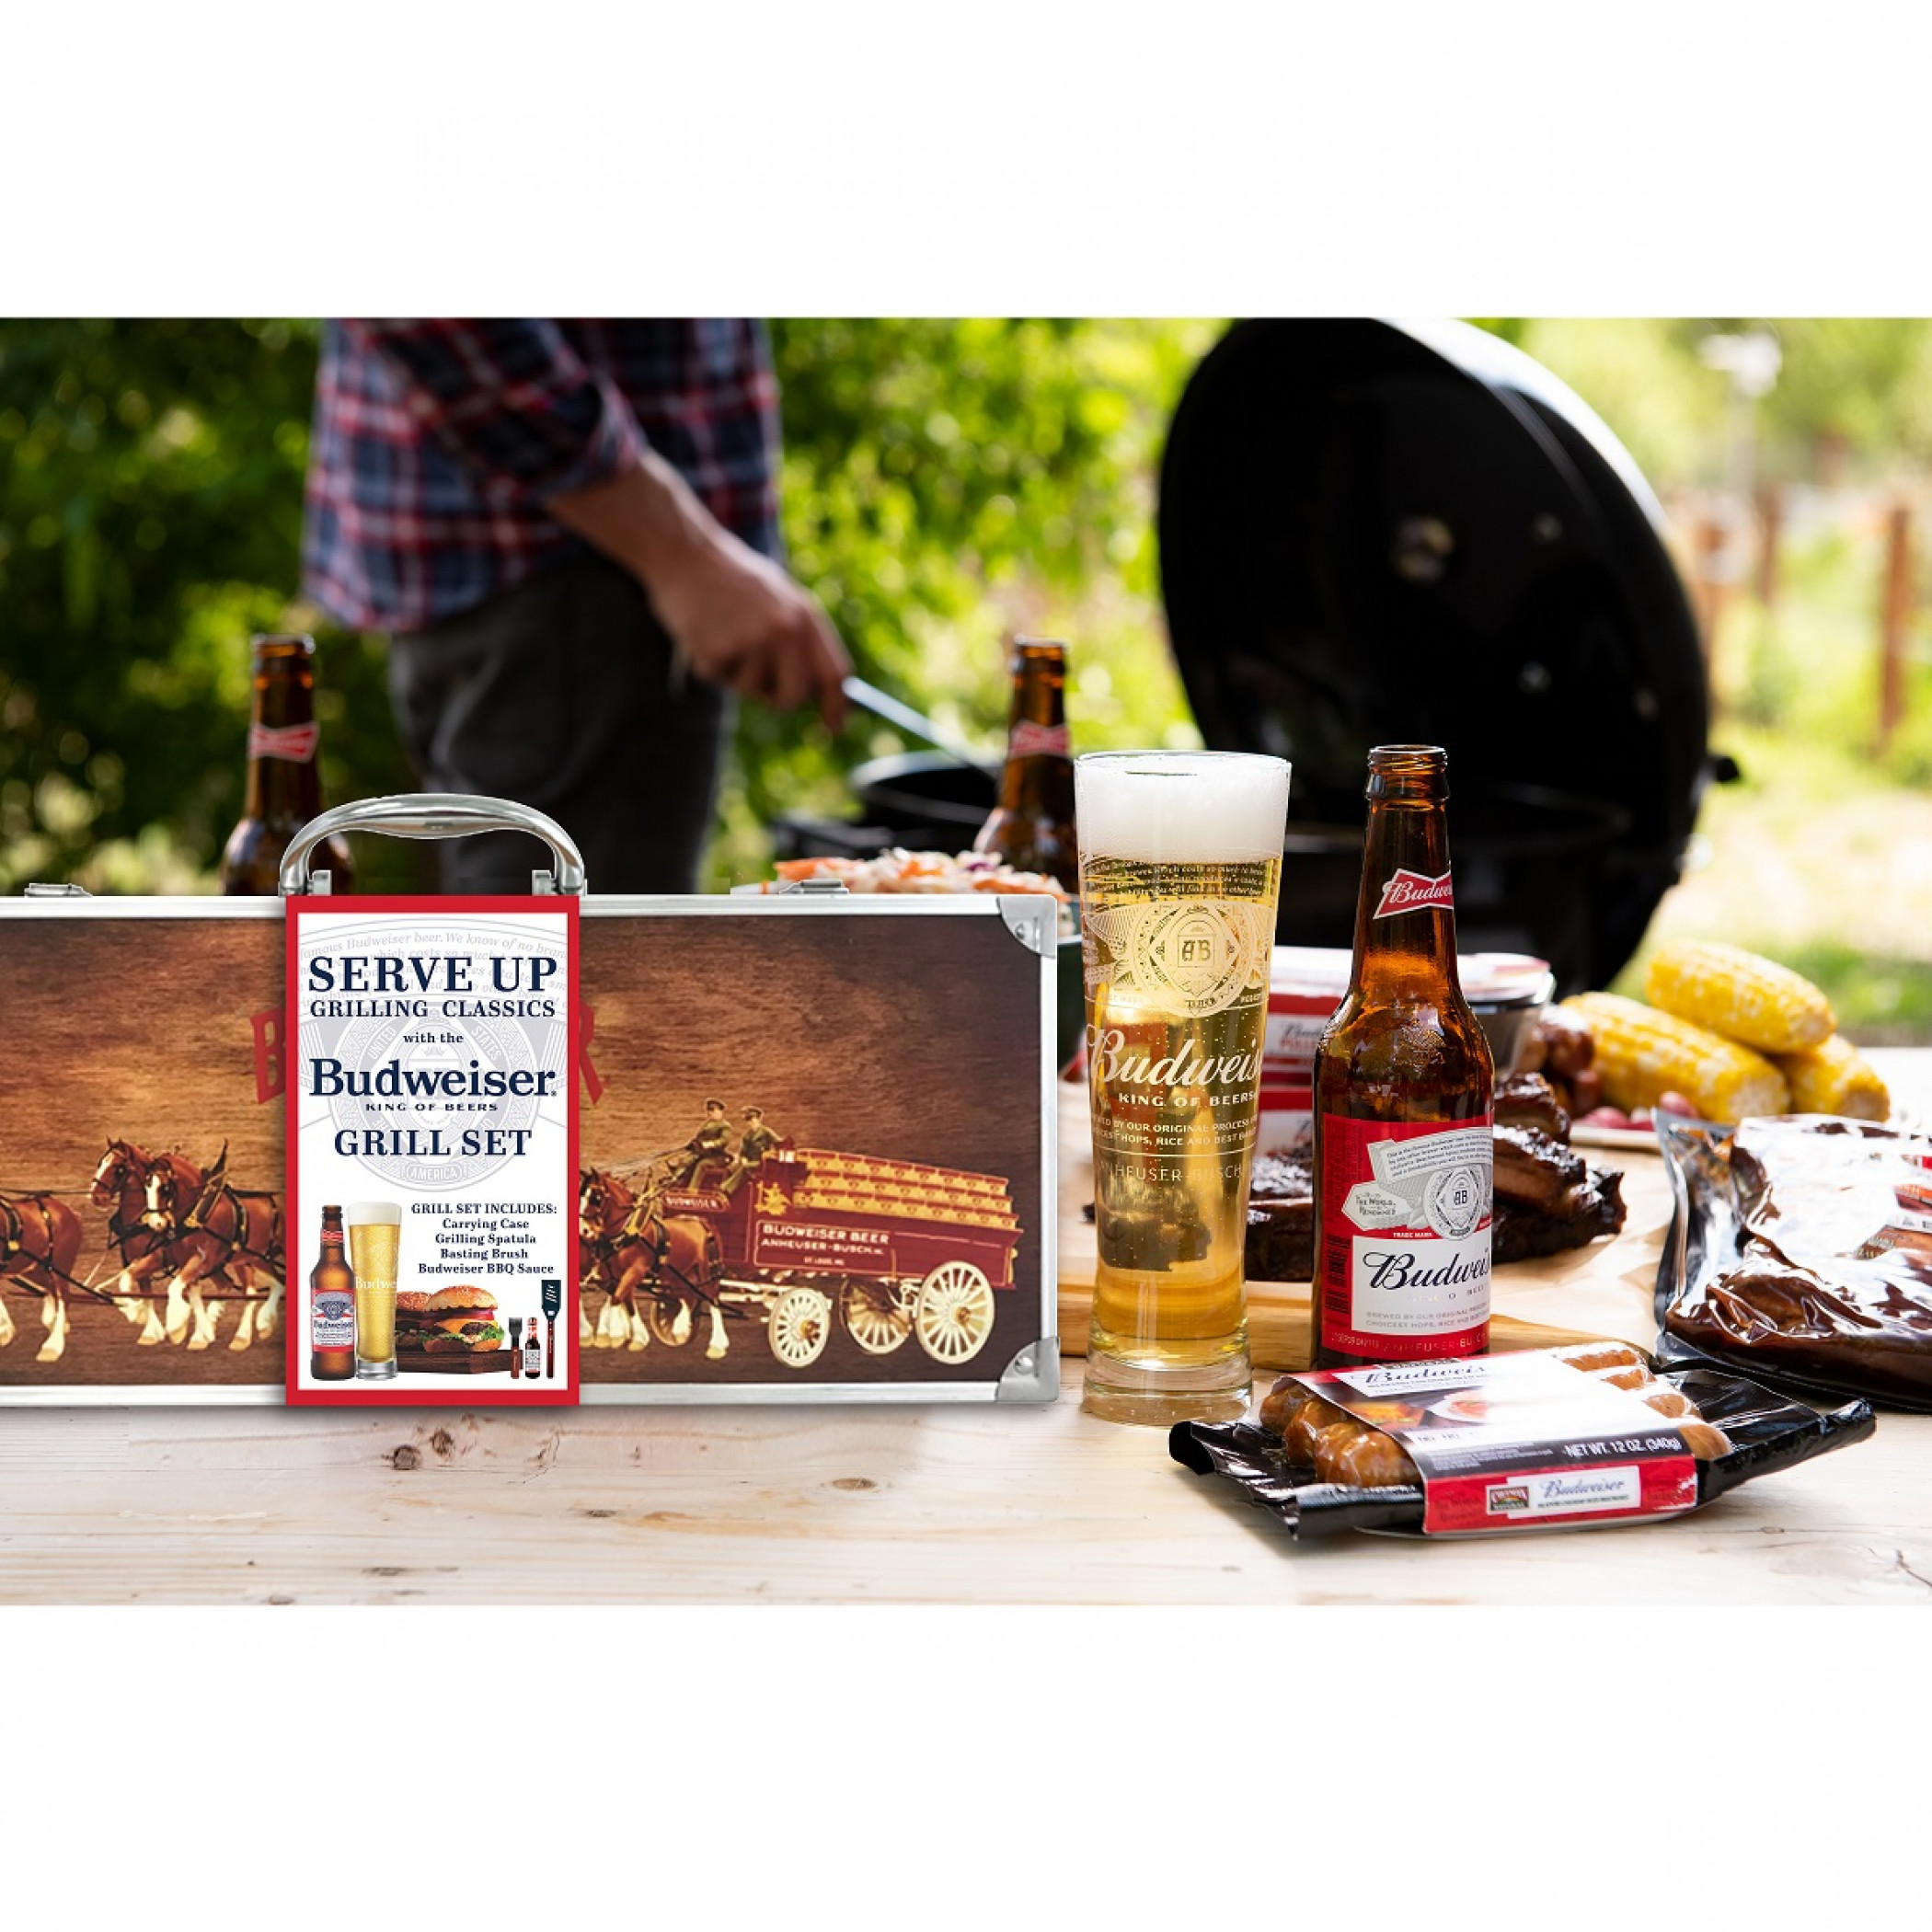 Set Ustensile Barbecue Budweiser Officiel: Achetez En ligne en Promo